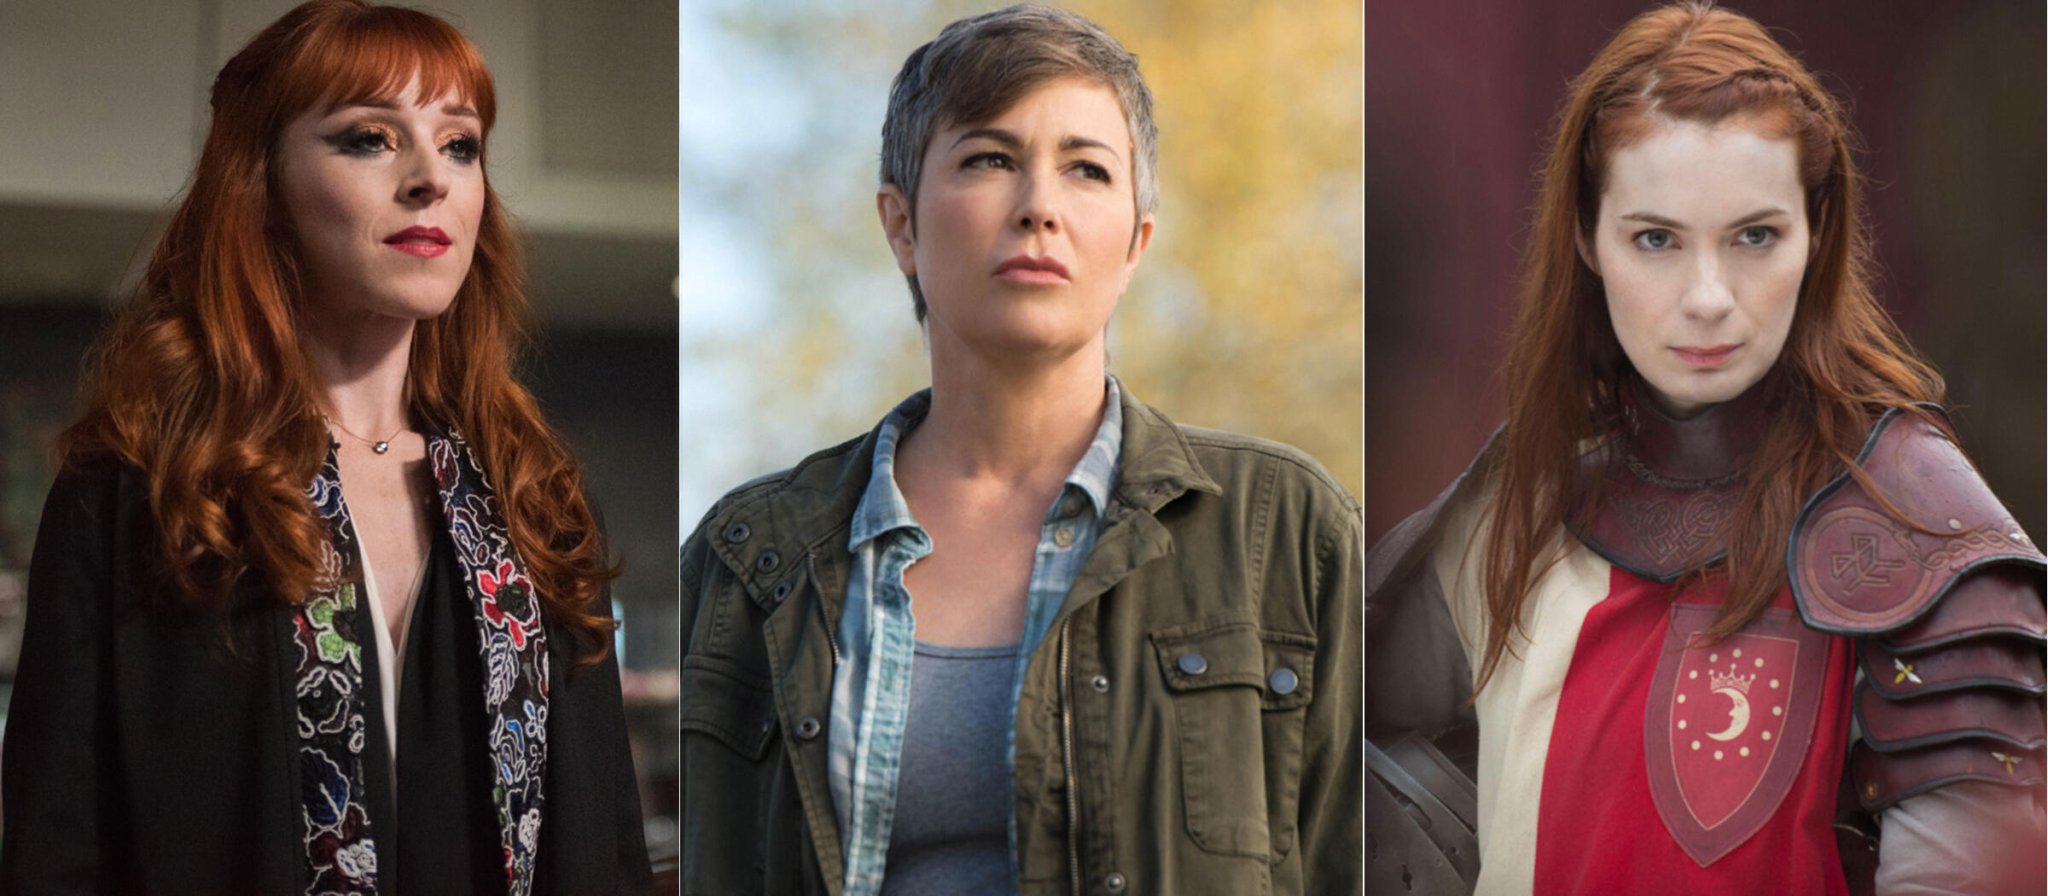 Supernatural's Most Memorable Guest Stars Deliver an Emotional Goodbye to Fans